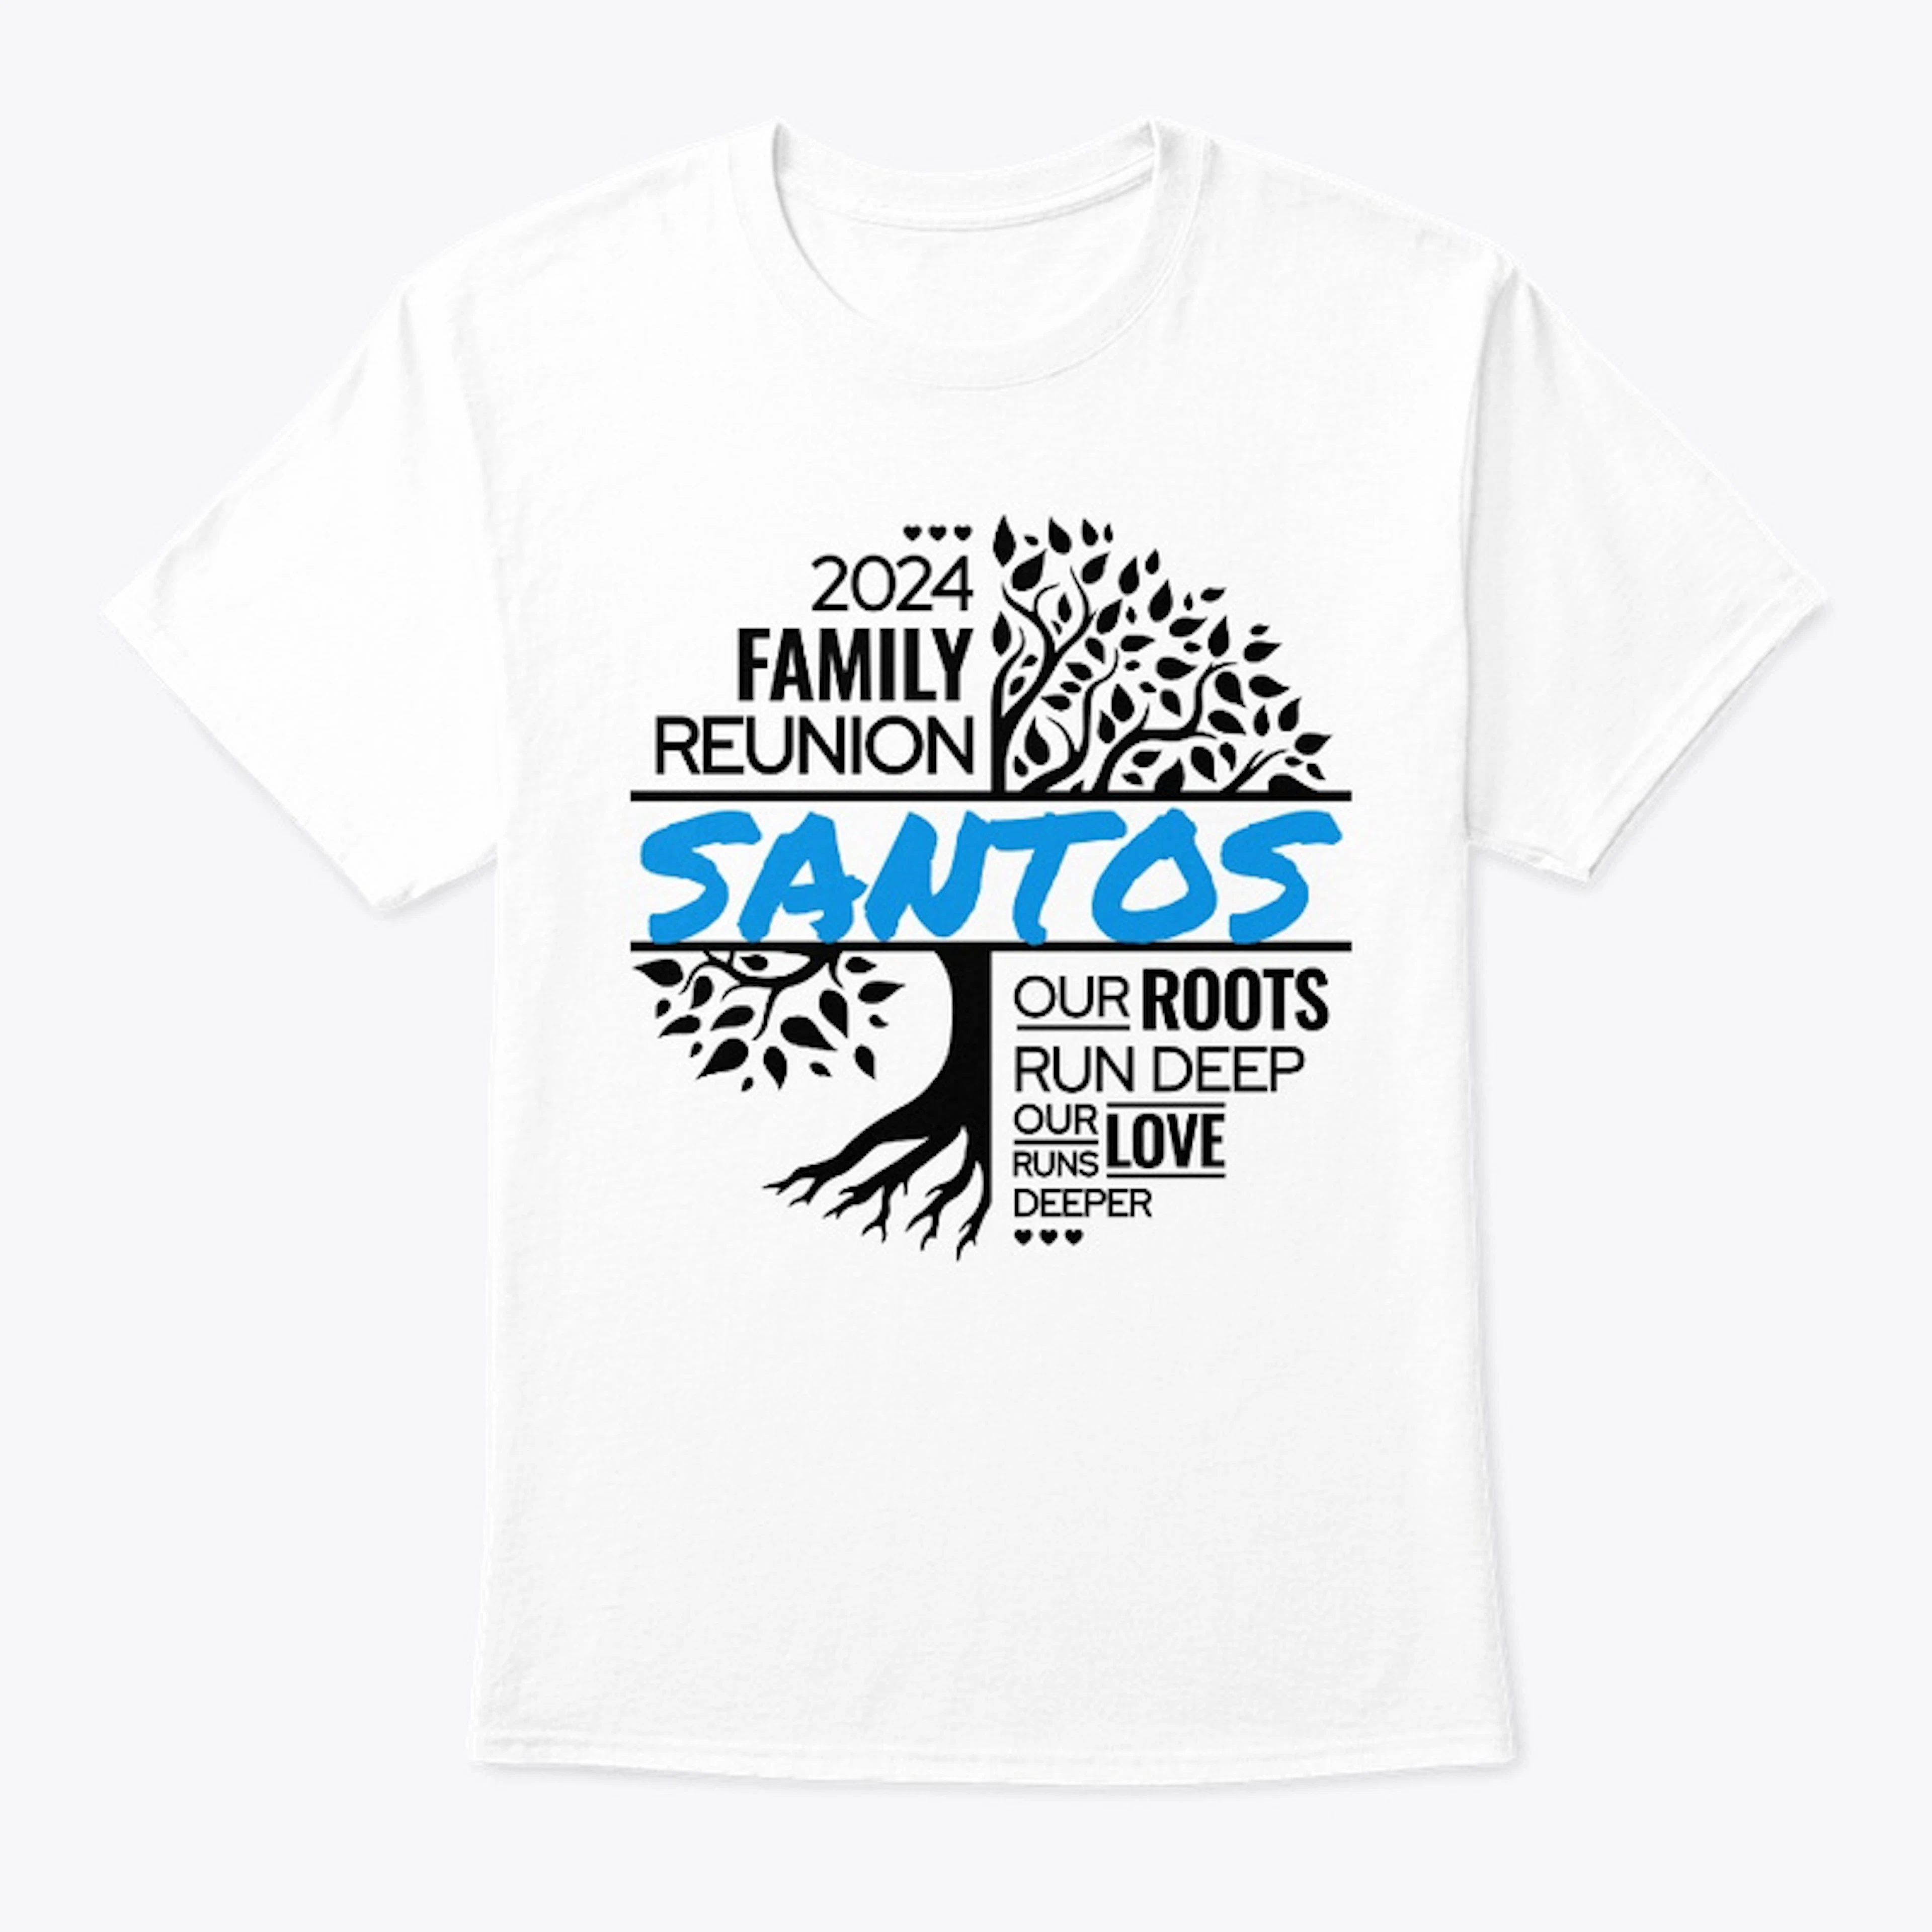 SANTOS FAMILY REUNION